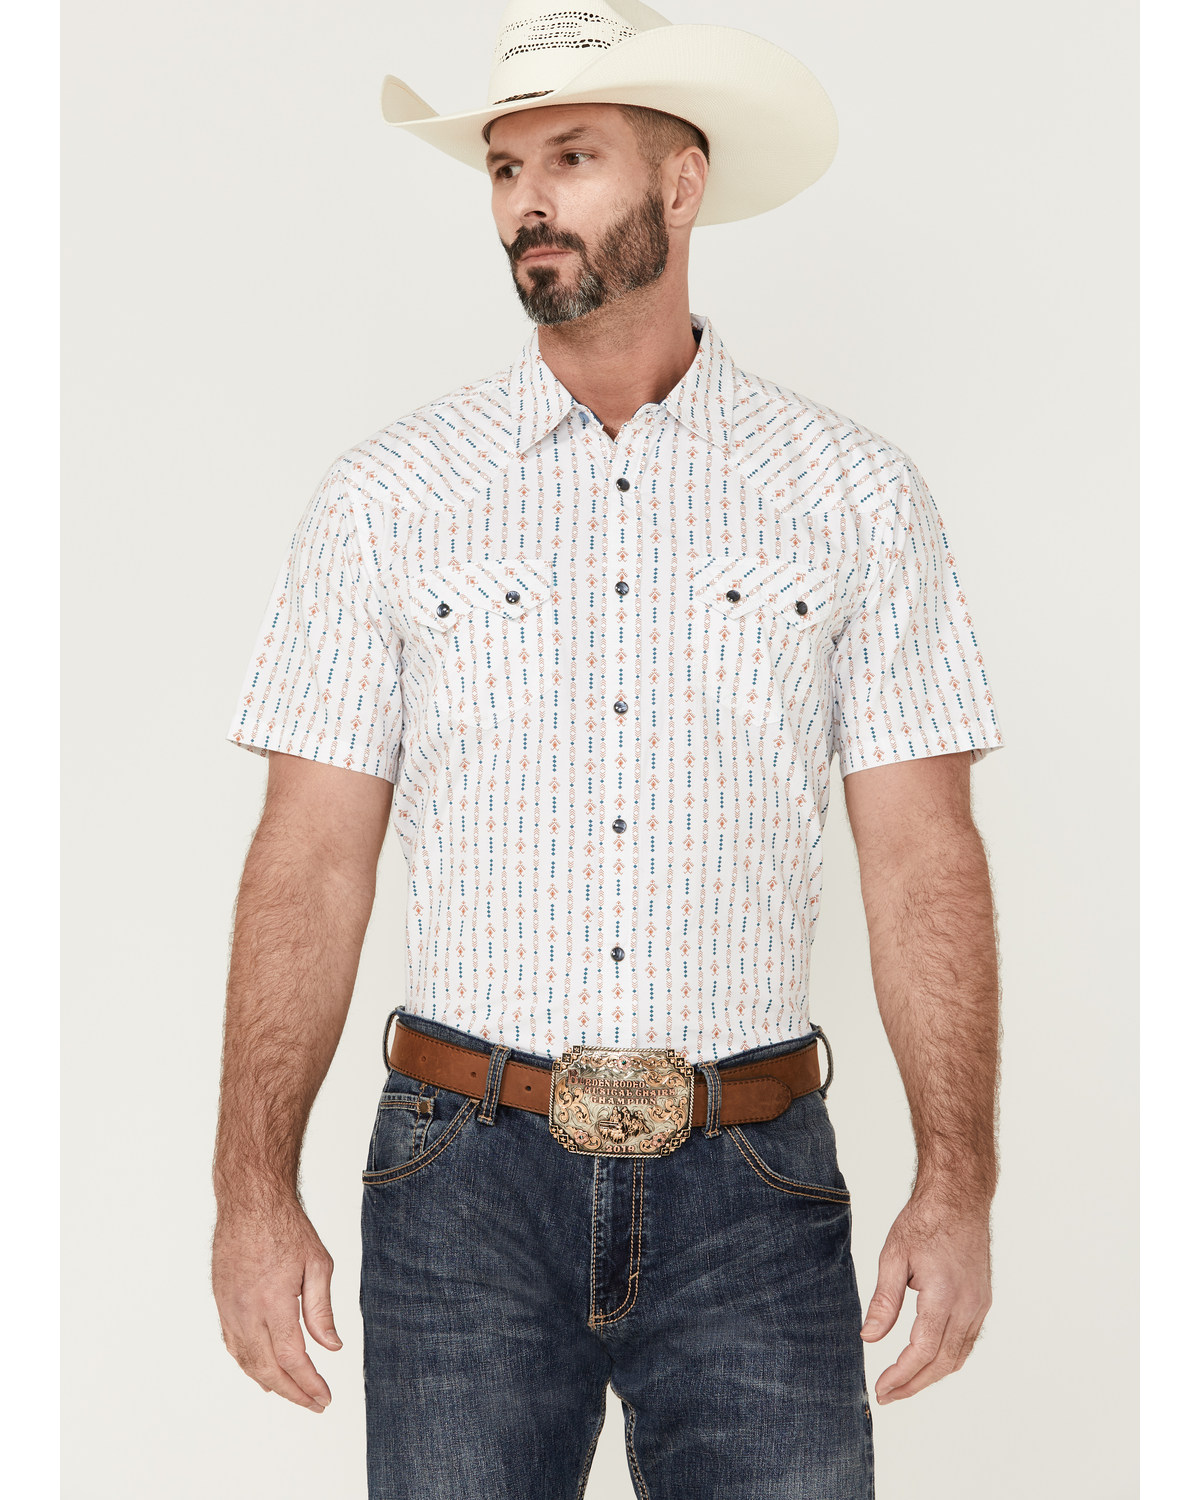 Moonshine Spirit Men's Cocopah Southwestern Print Short Sleeve Snap Western Shirt